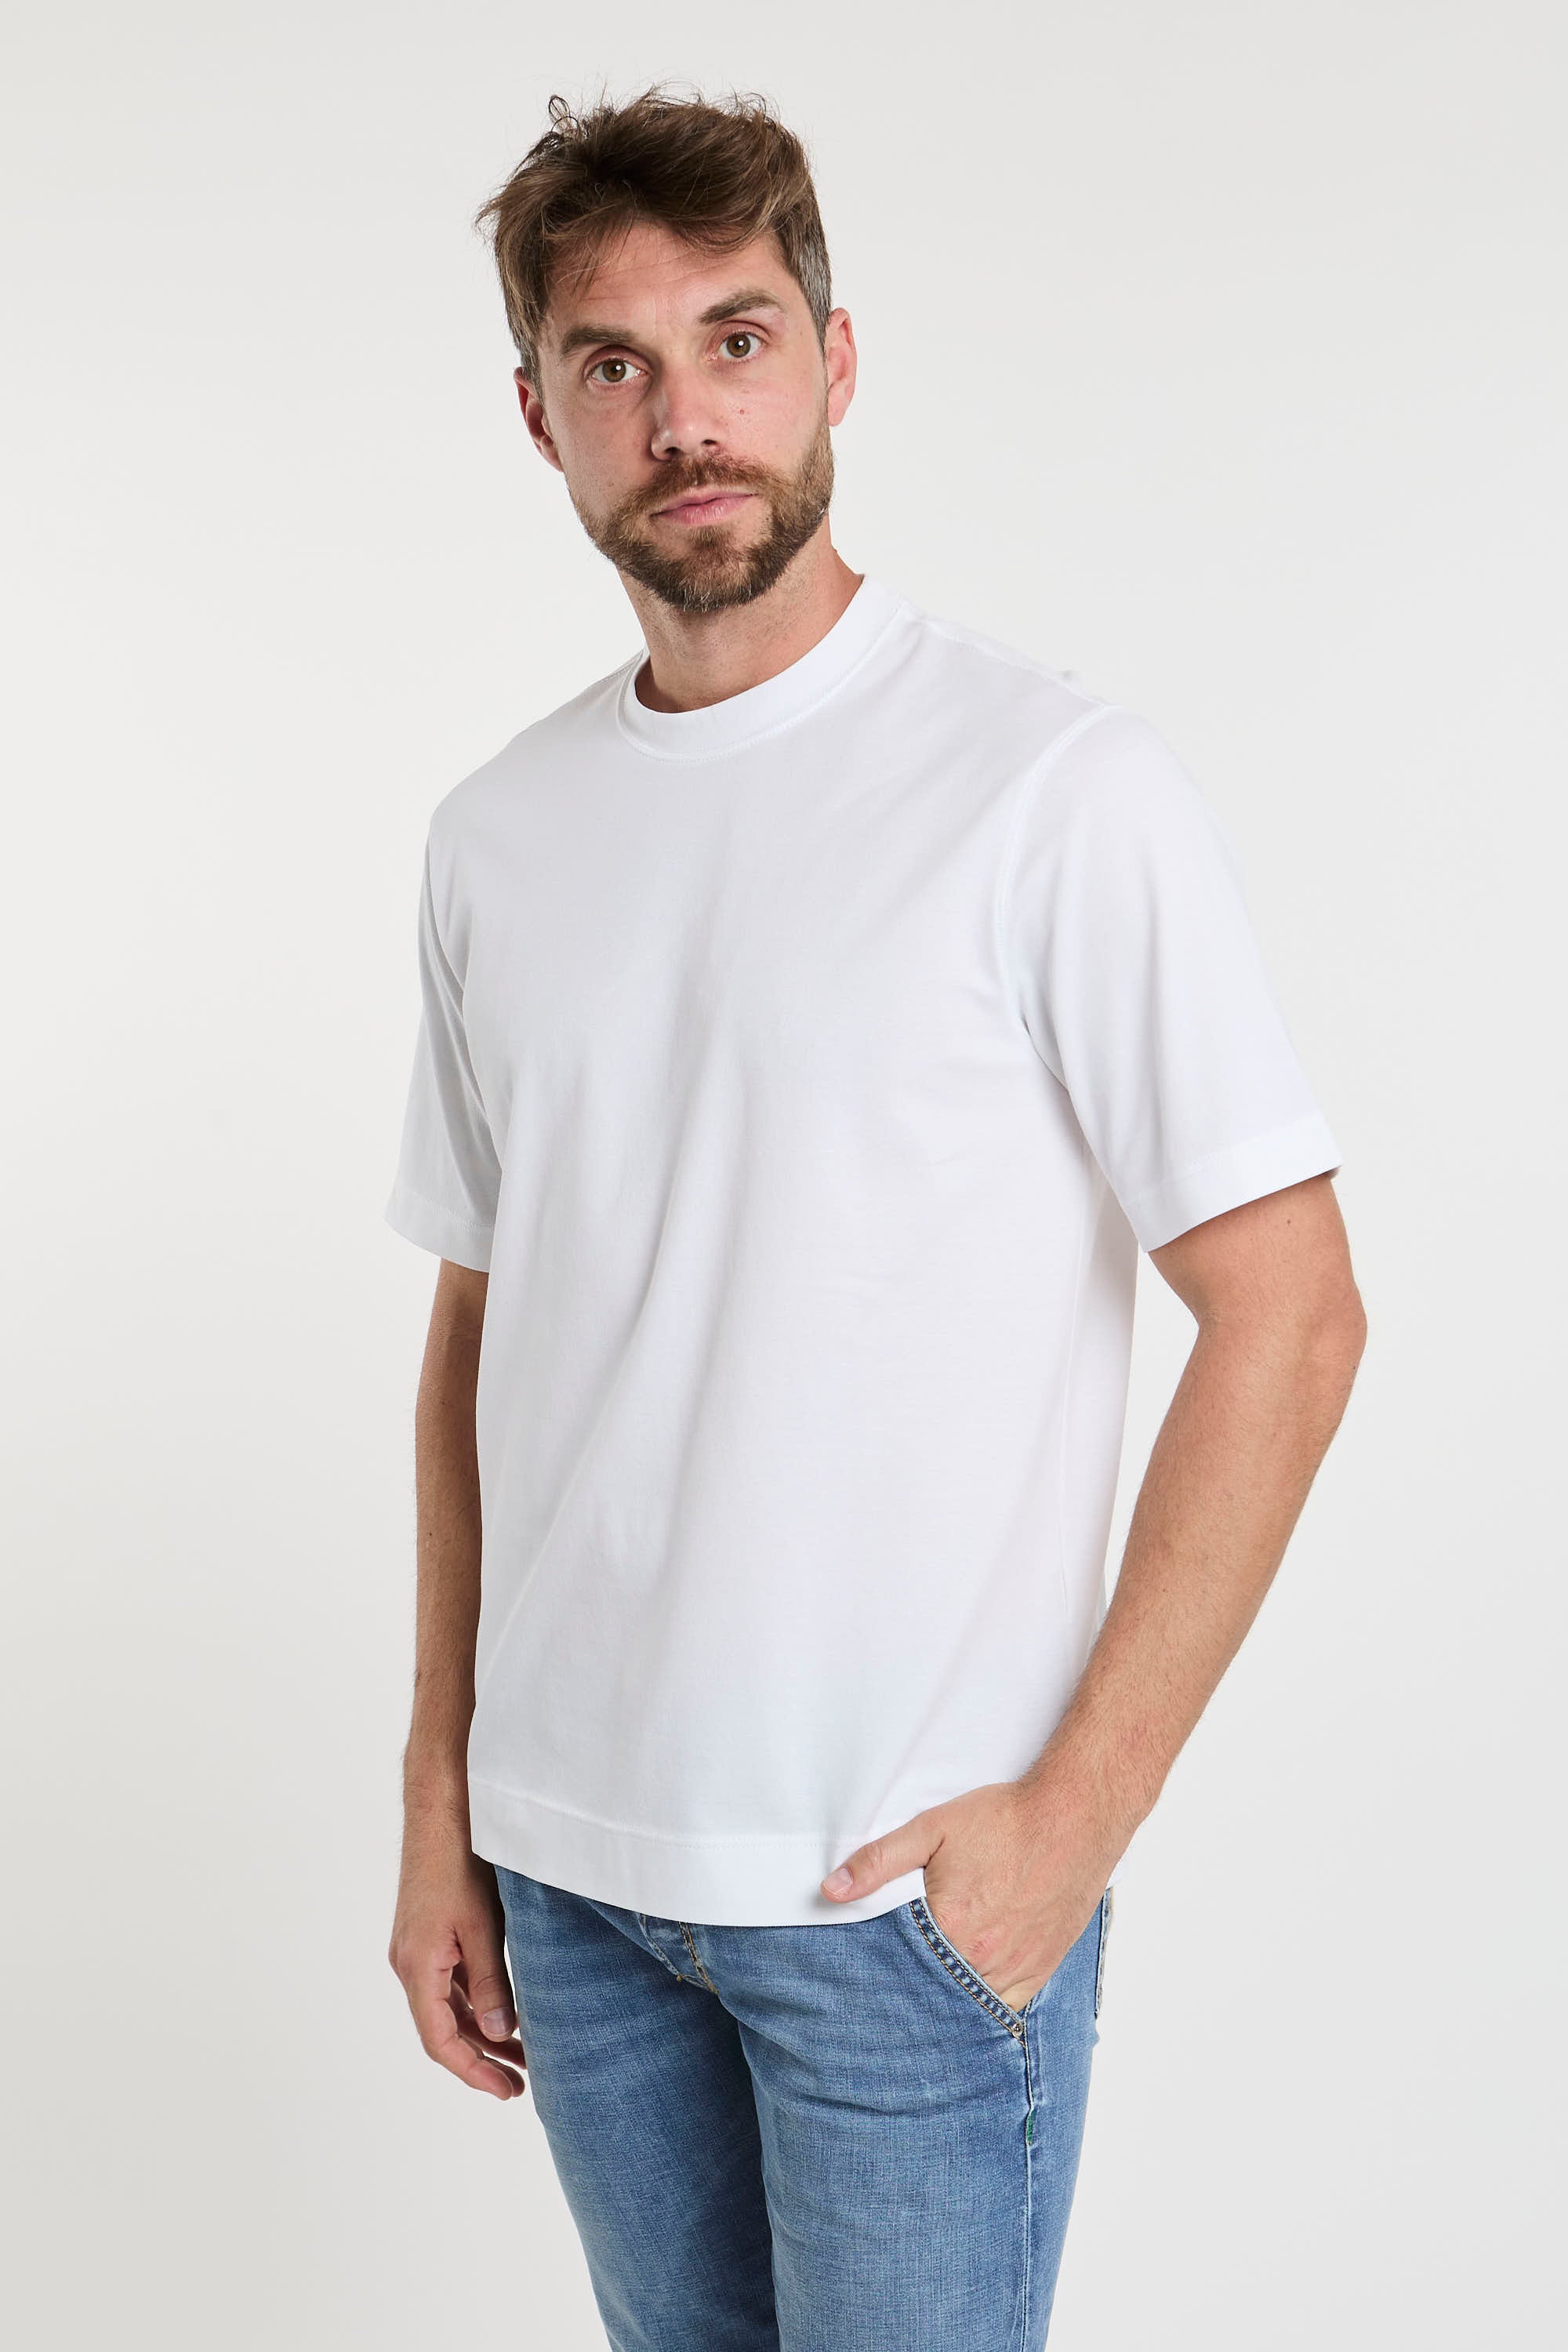 Circolo 1901 T-Shirt Cotton White 6505-5